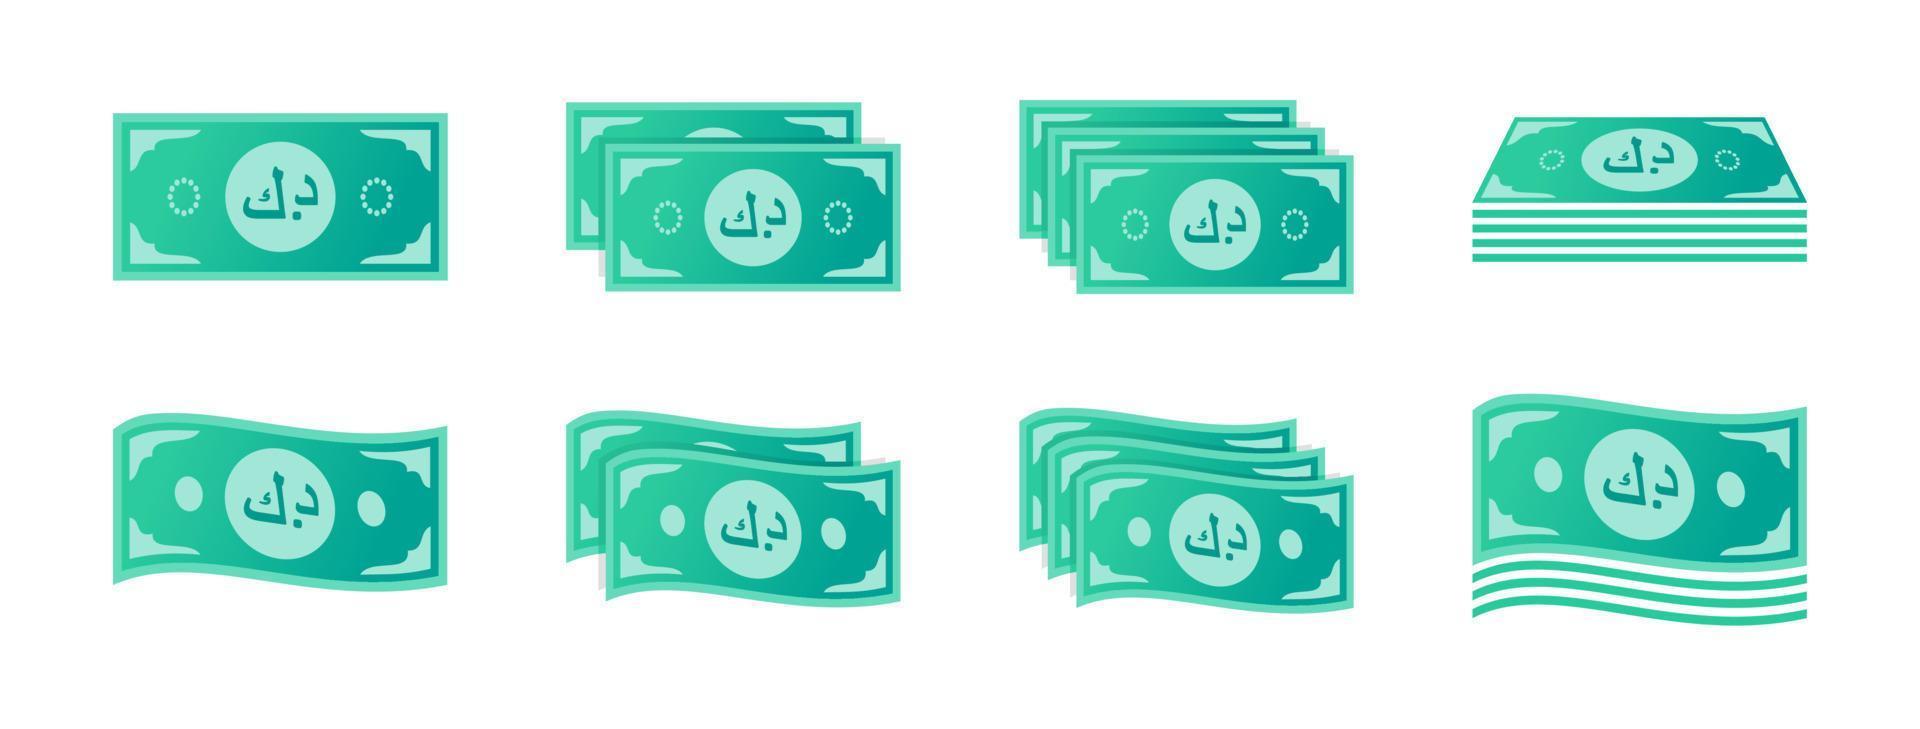 koweïtien dinar billet de banque icône ensemble vecteur